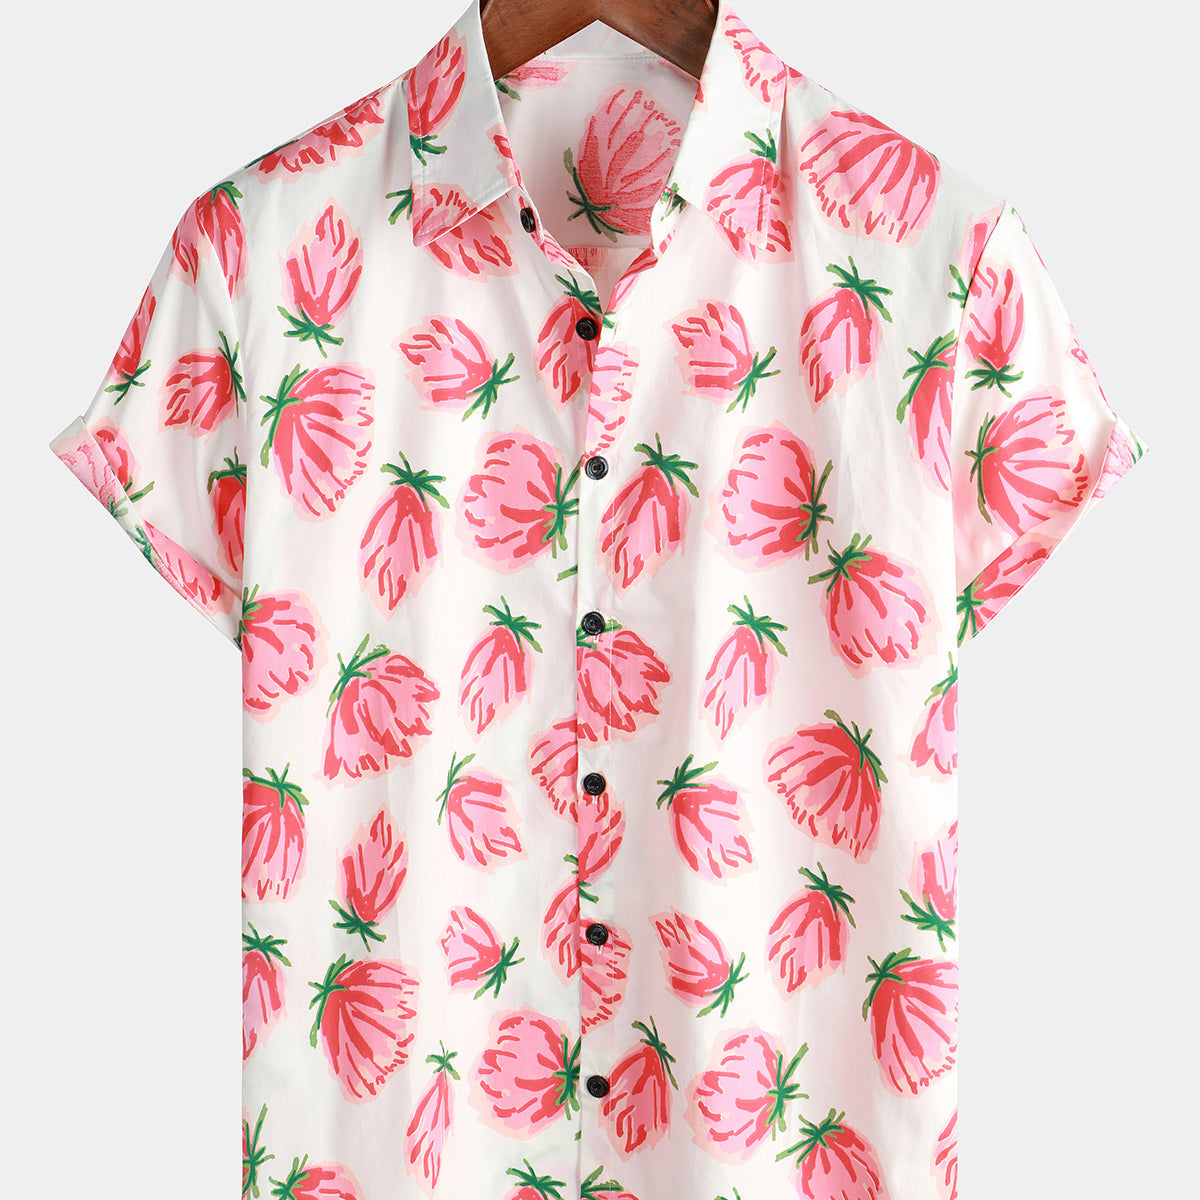 Men's Pink Floral Summer Flowers Cotton Breathable Button Up Cotton Short Sleeve Shirt